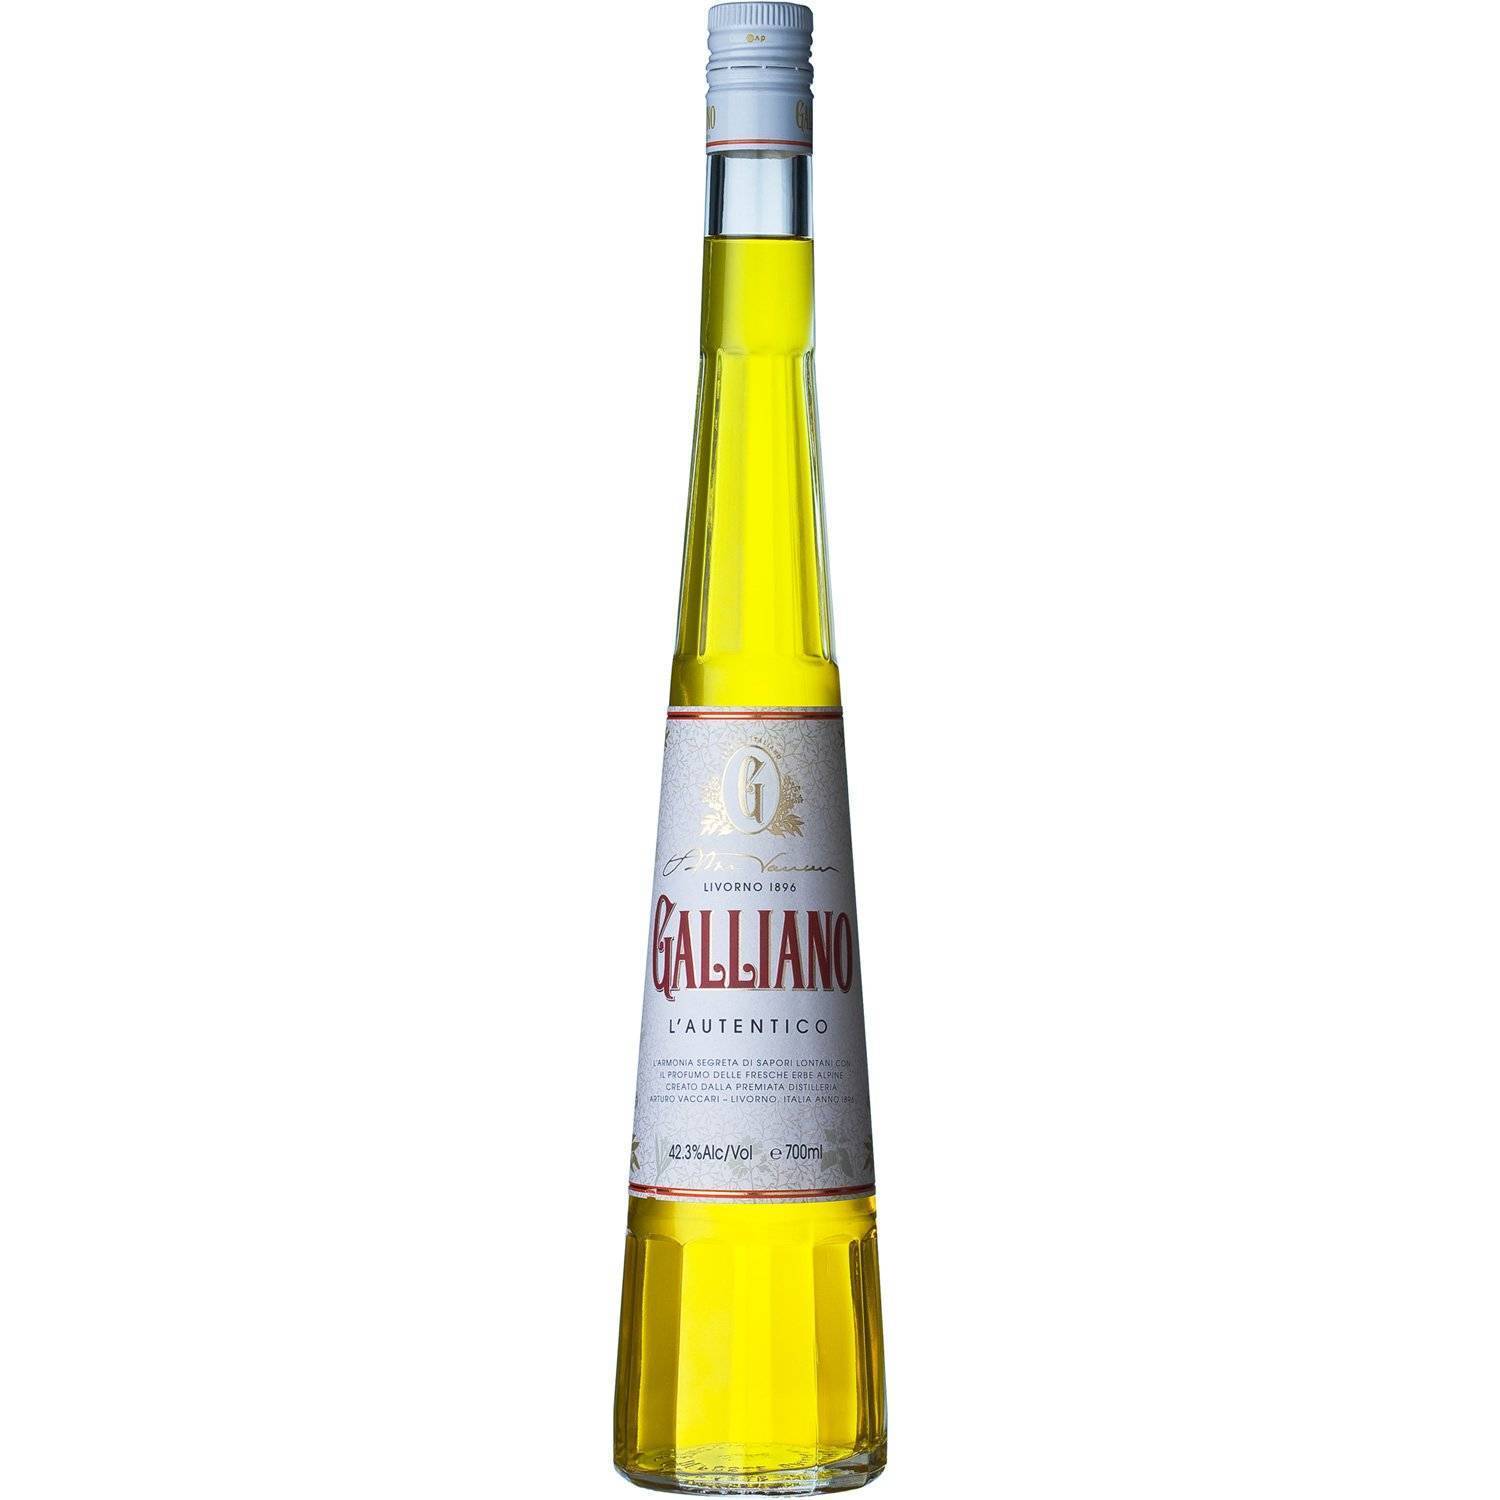 Galliano ликер — история алкоголя